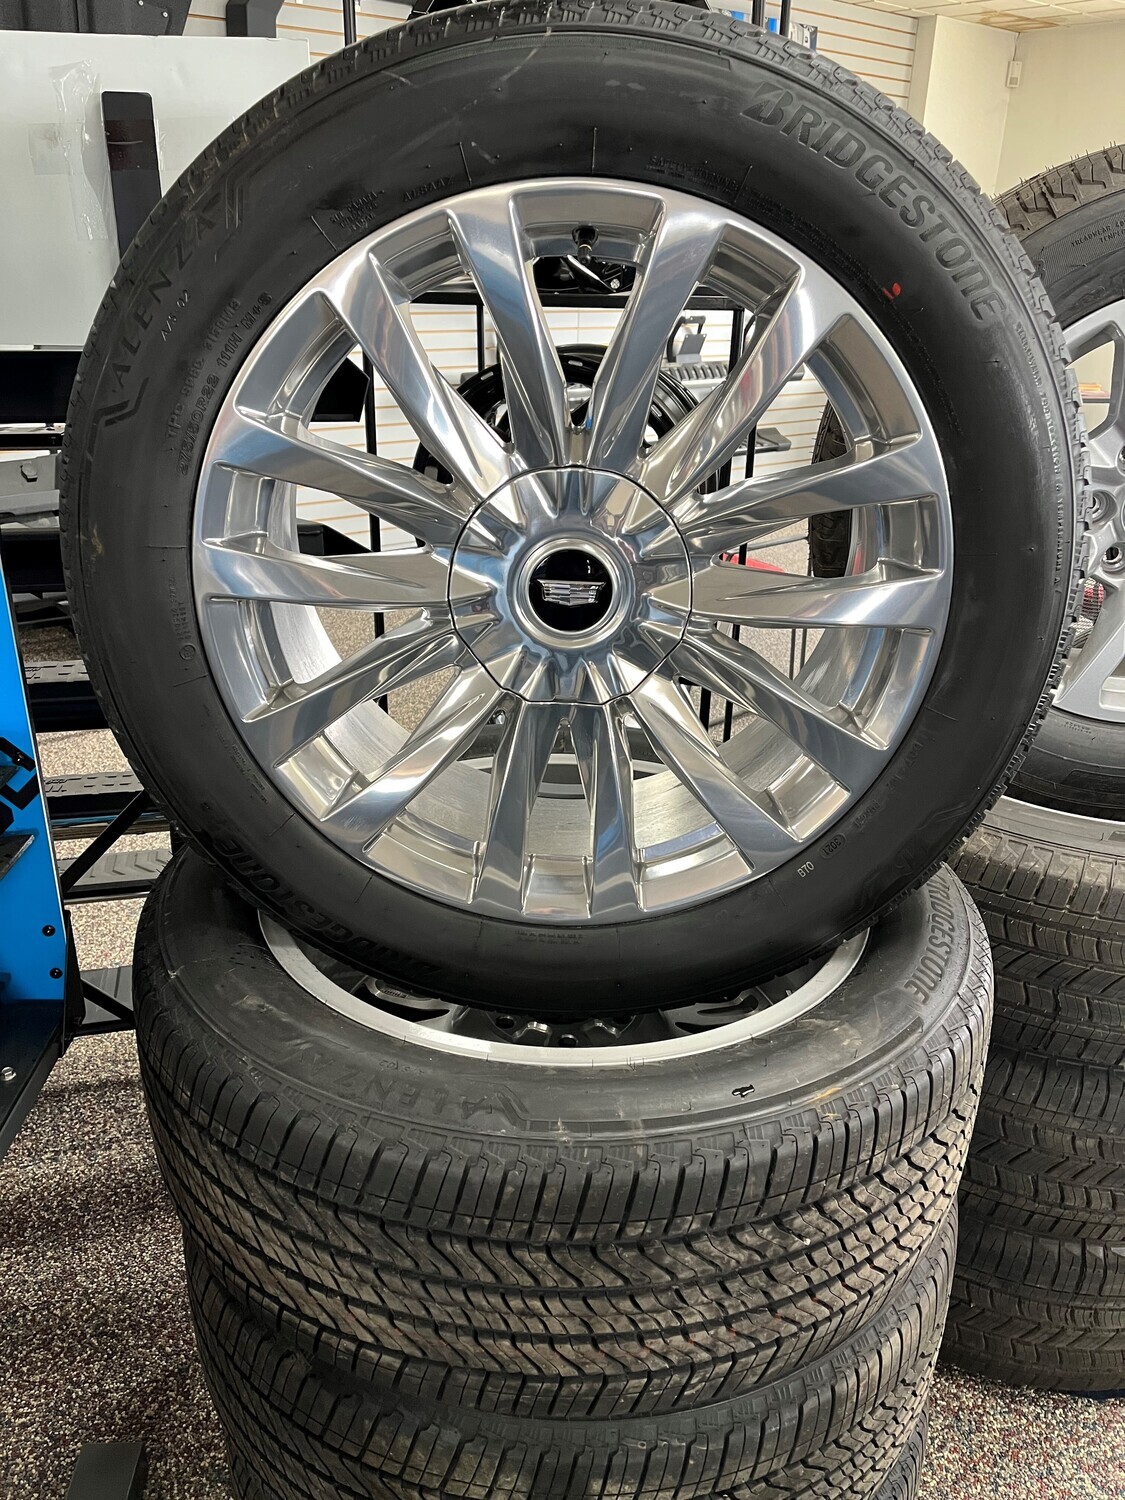 Cadillac Tires and Wheels